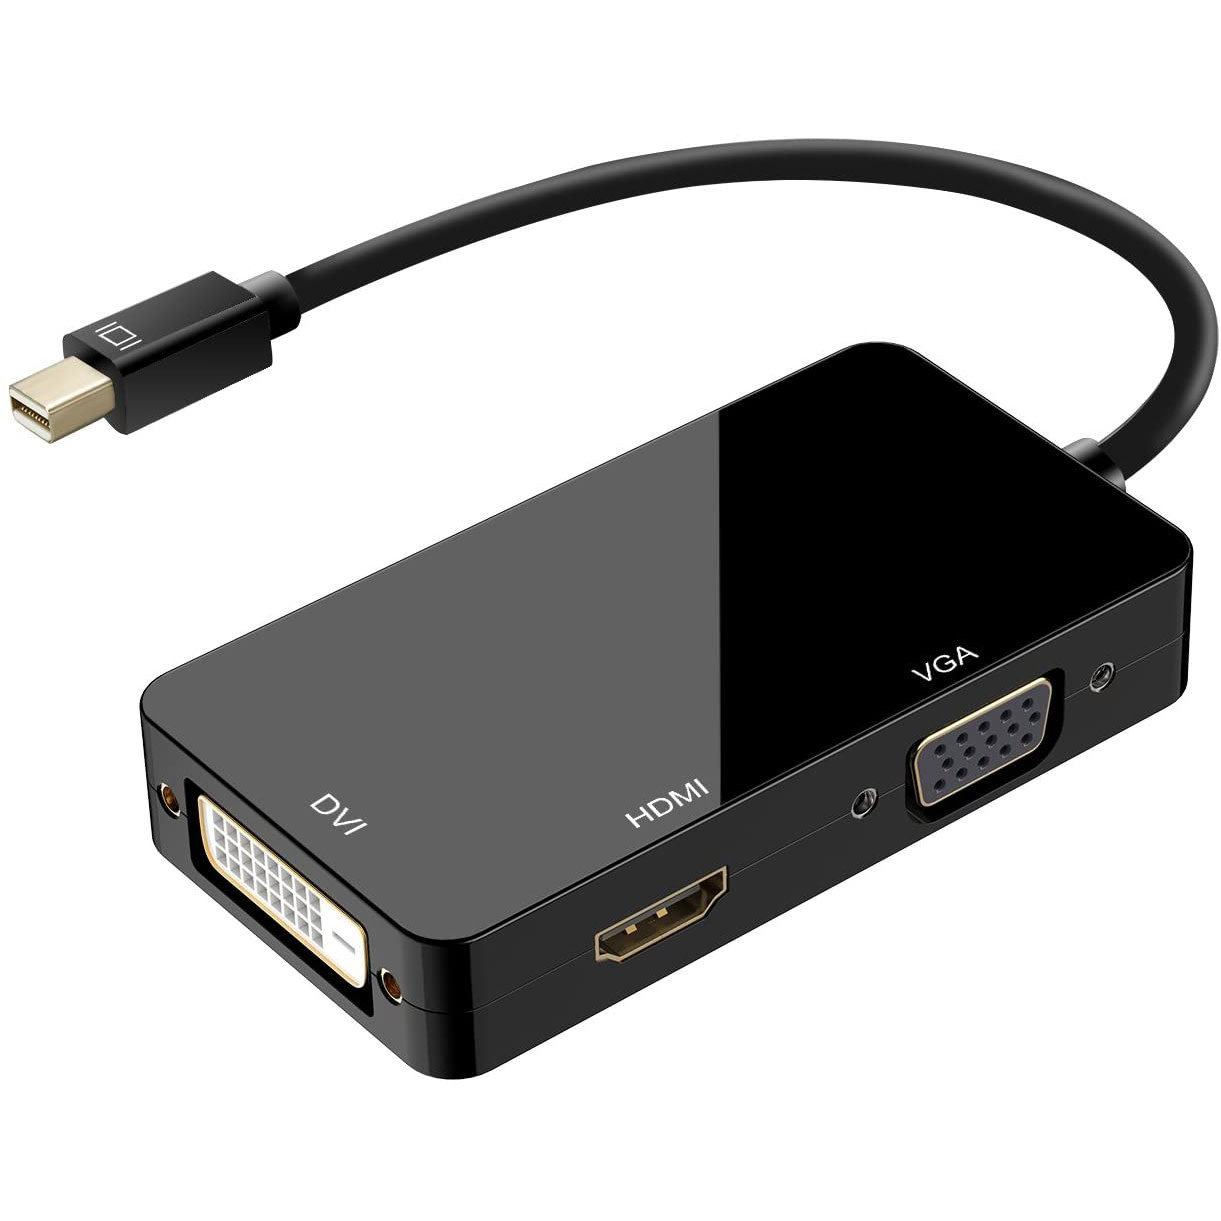 Mini DisplayPort (Thunderbolt Port Compatible) HDMI/DVI/VGA Male to 3-in-1 Adapter in Black - Inc.